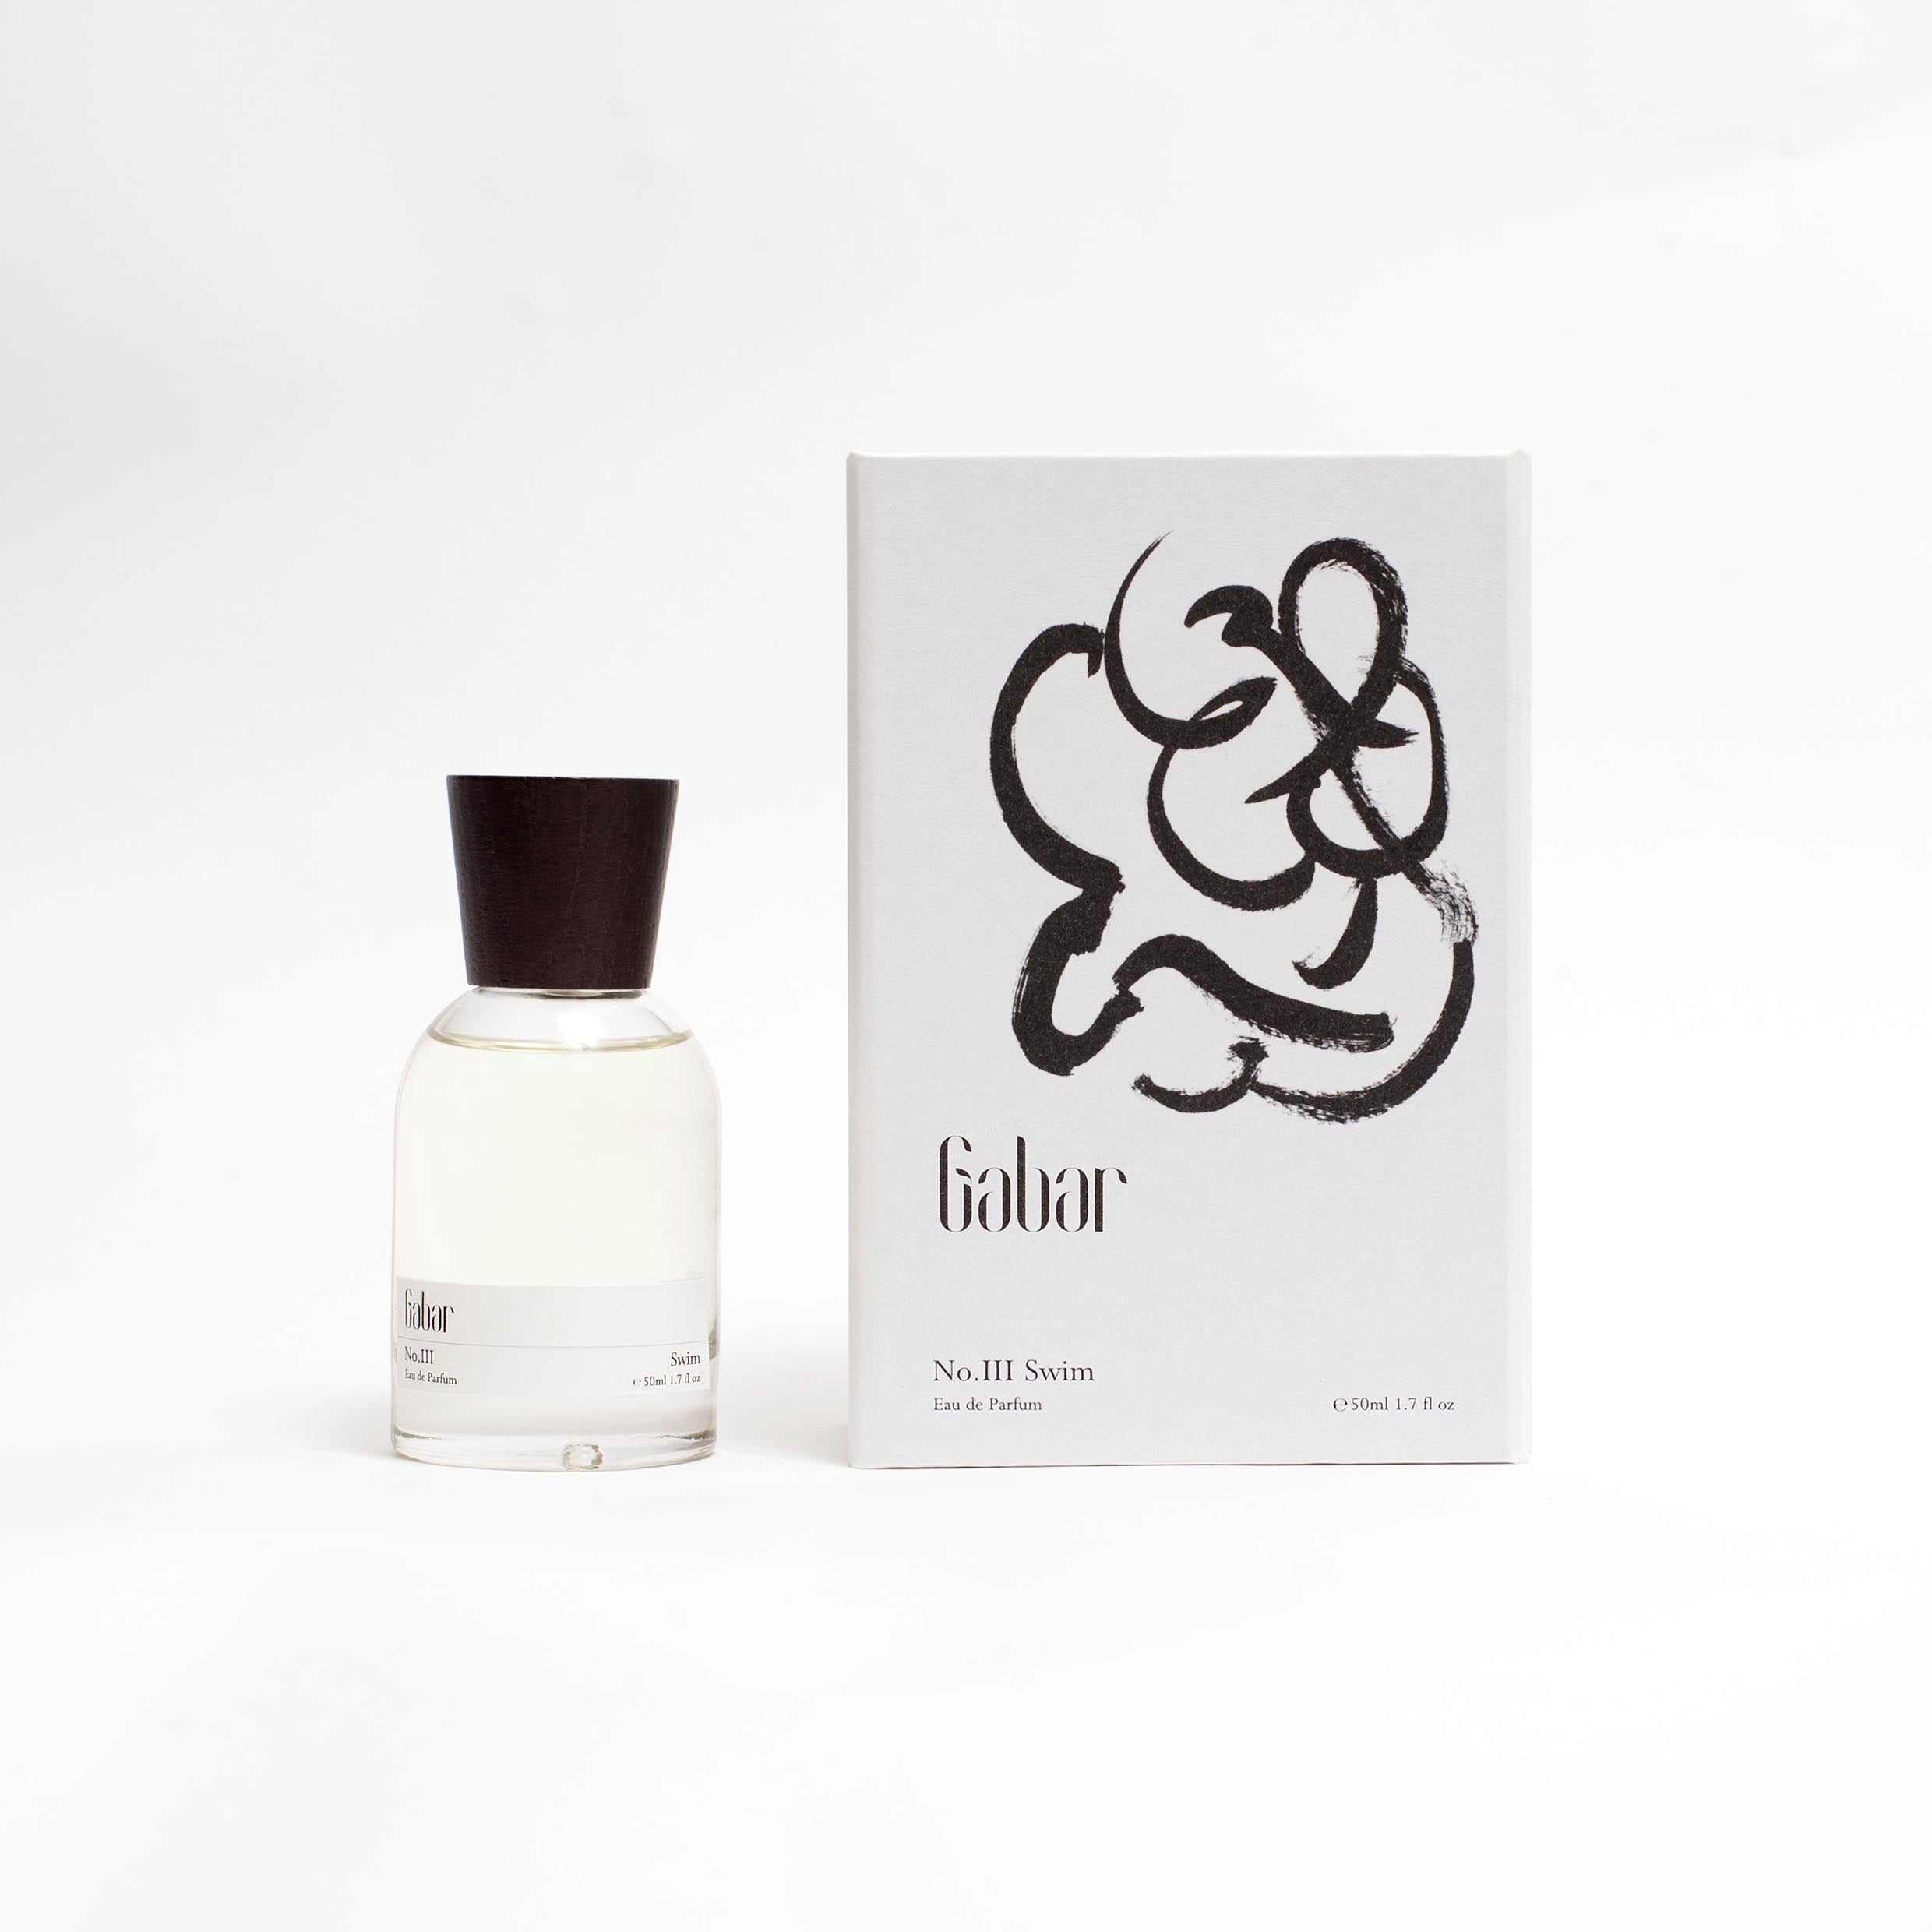 No.3 Swim 50ml Eau de Parfum Bottle and Box by Gabar